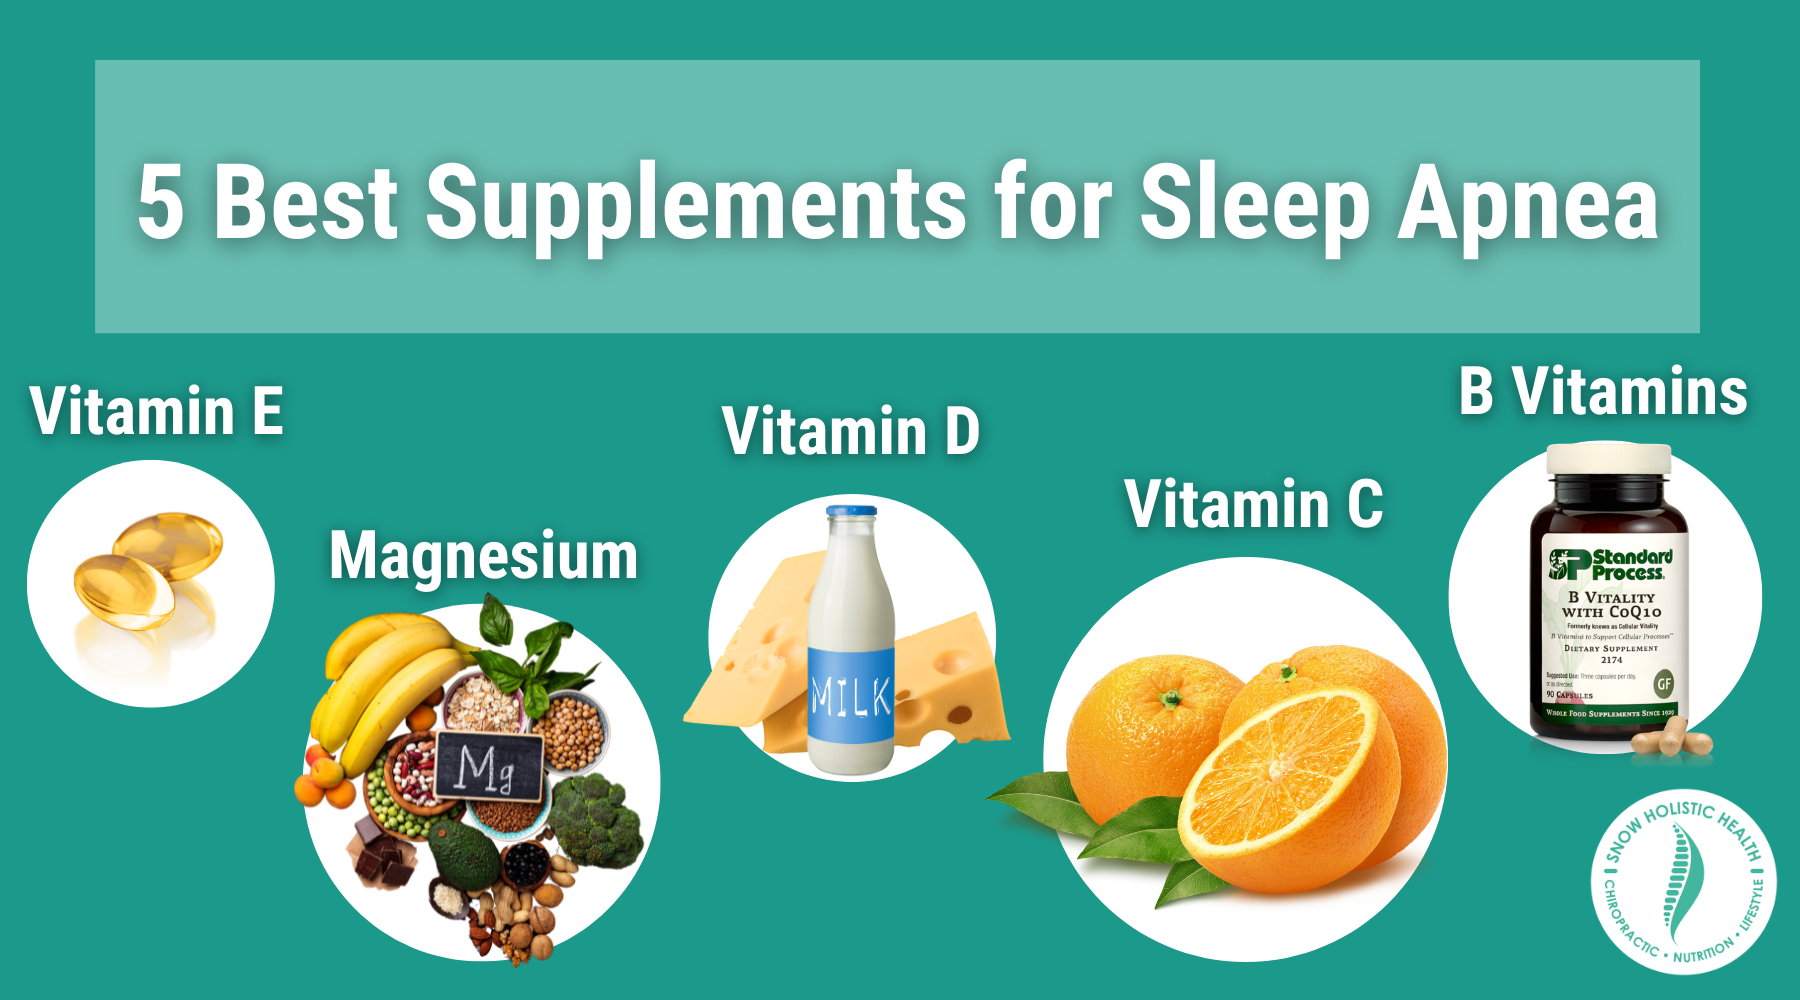 5 Best Supplements for Sleep Apnea Vitamin E, Magnesium, Vitamin D, Vitamin C, B Vitamins